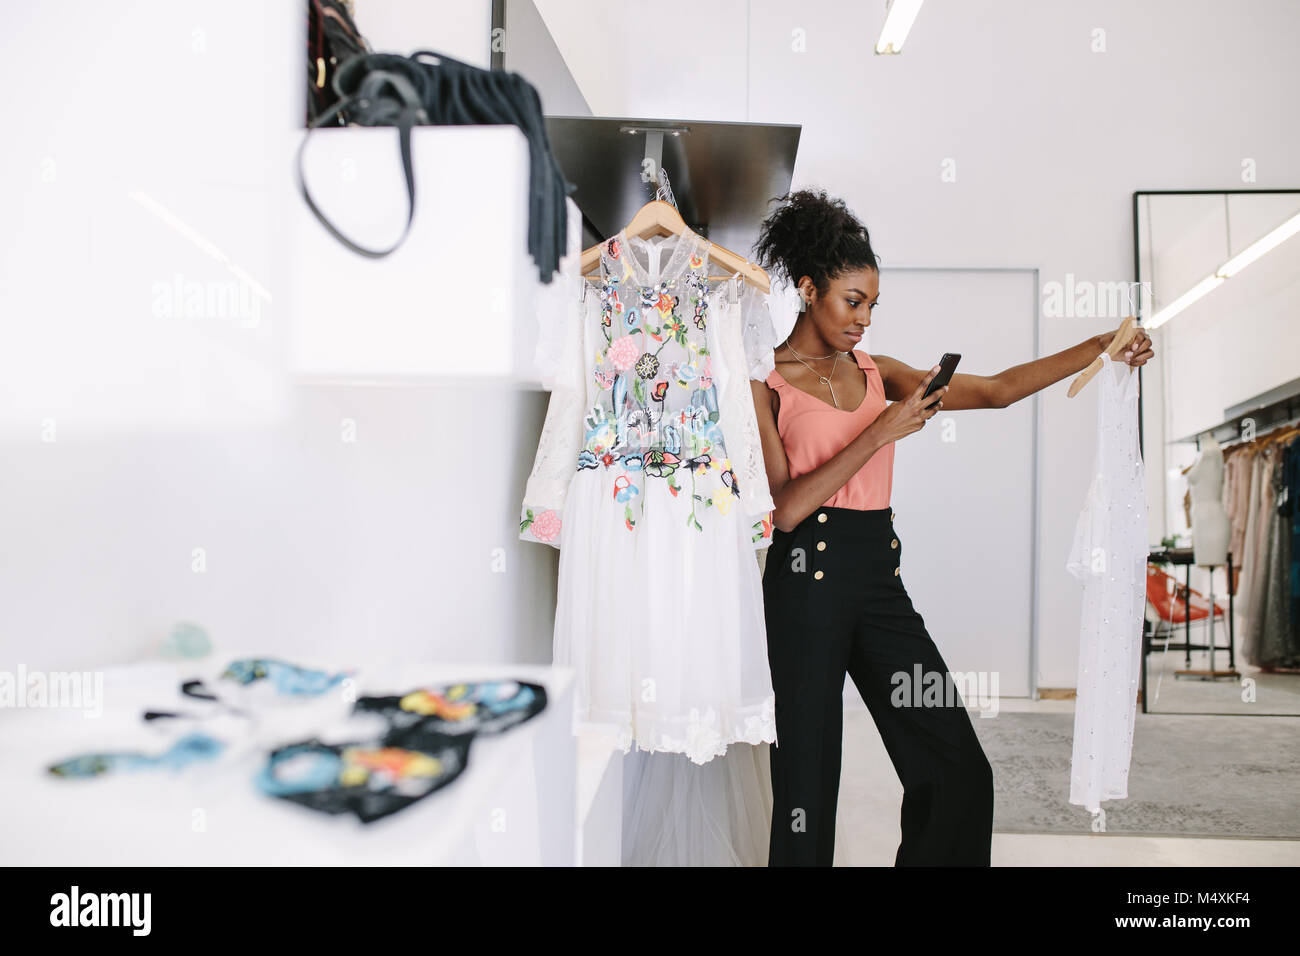 Fashion designer taking photograph of a designer dresses in her fashion studio. Customer taking photograph of dress in a fashion clothes shop. Stock Photo